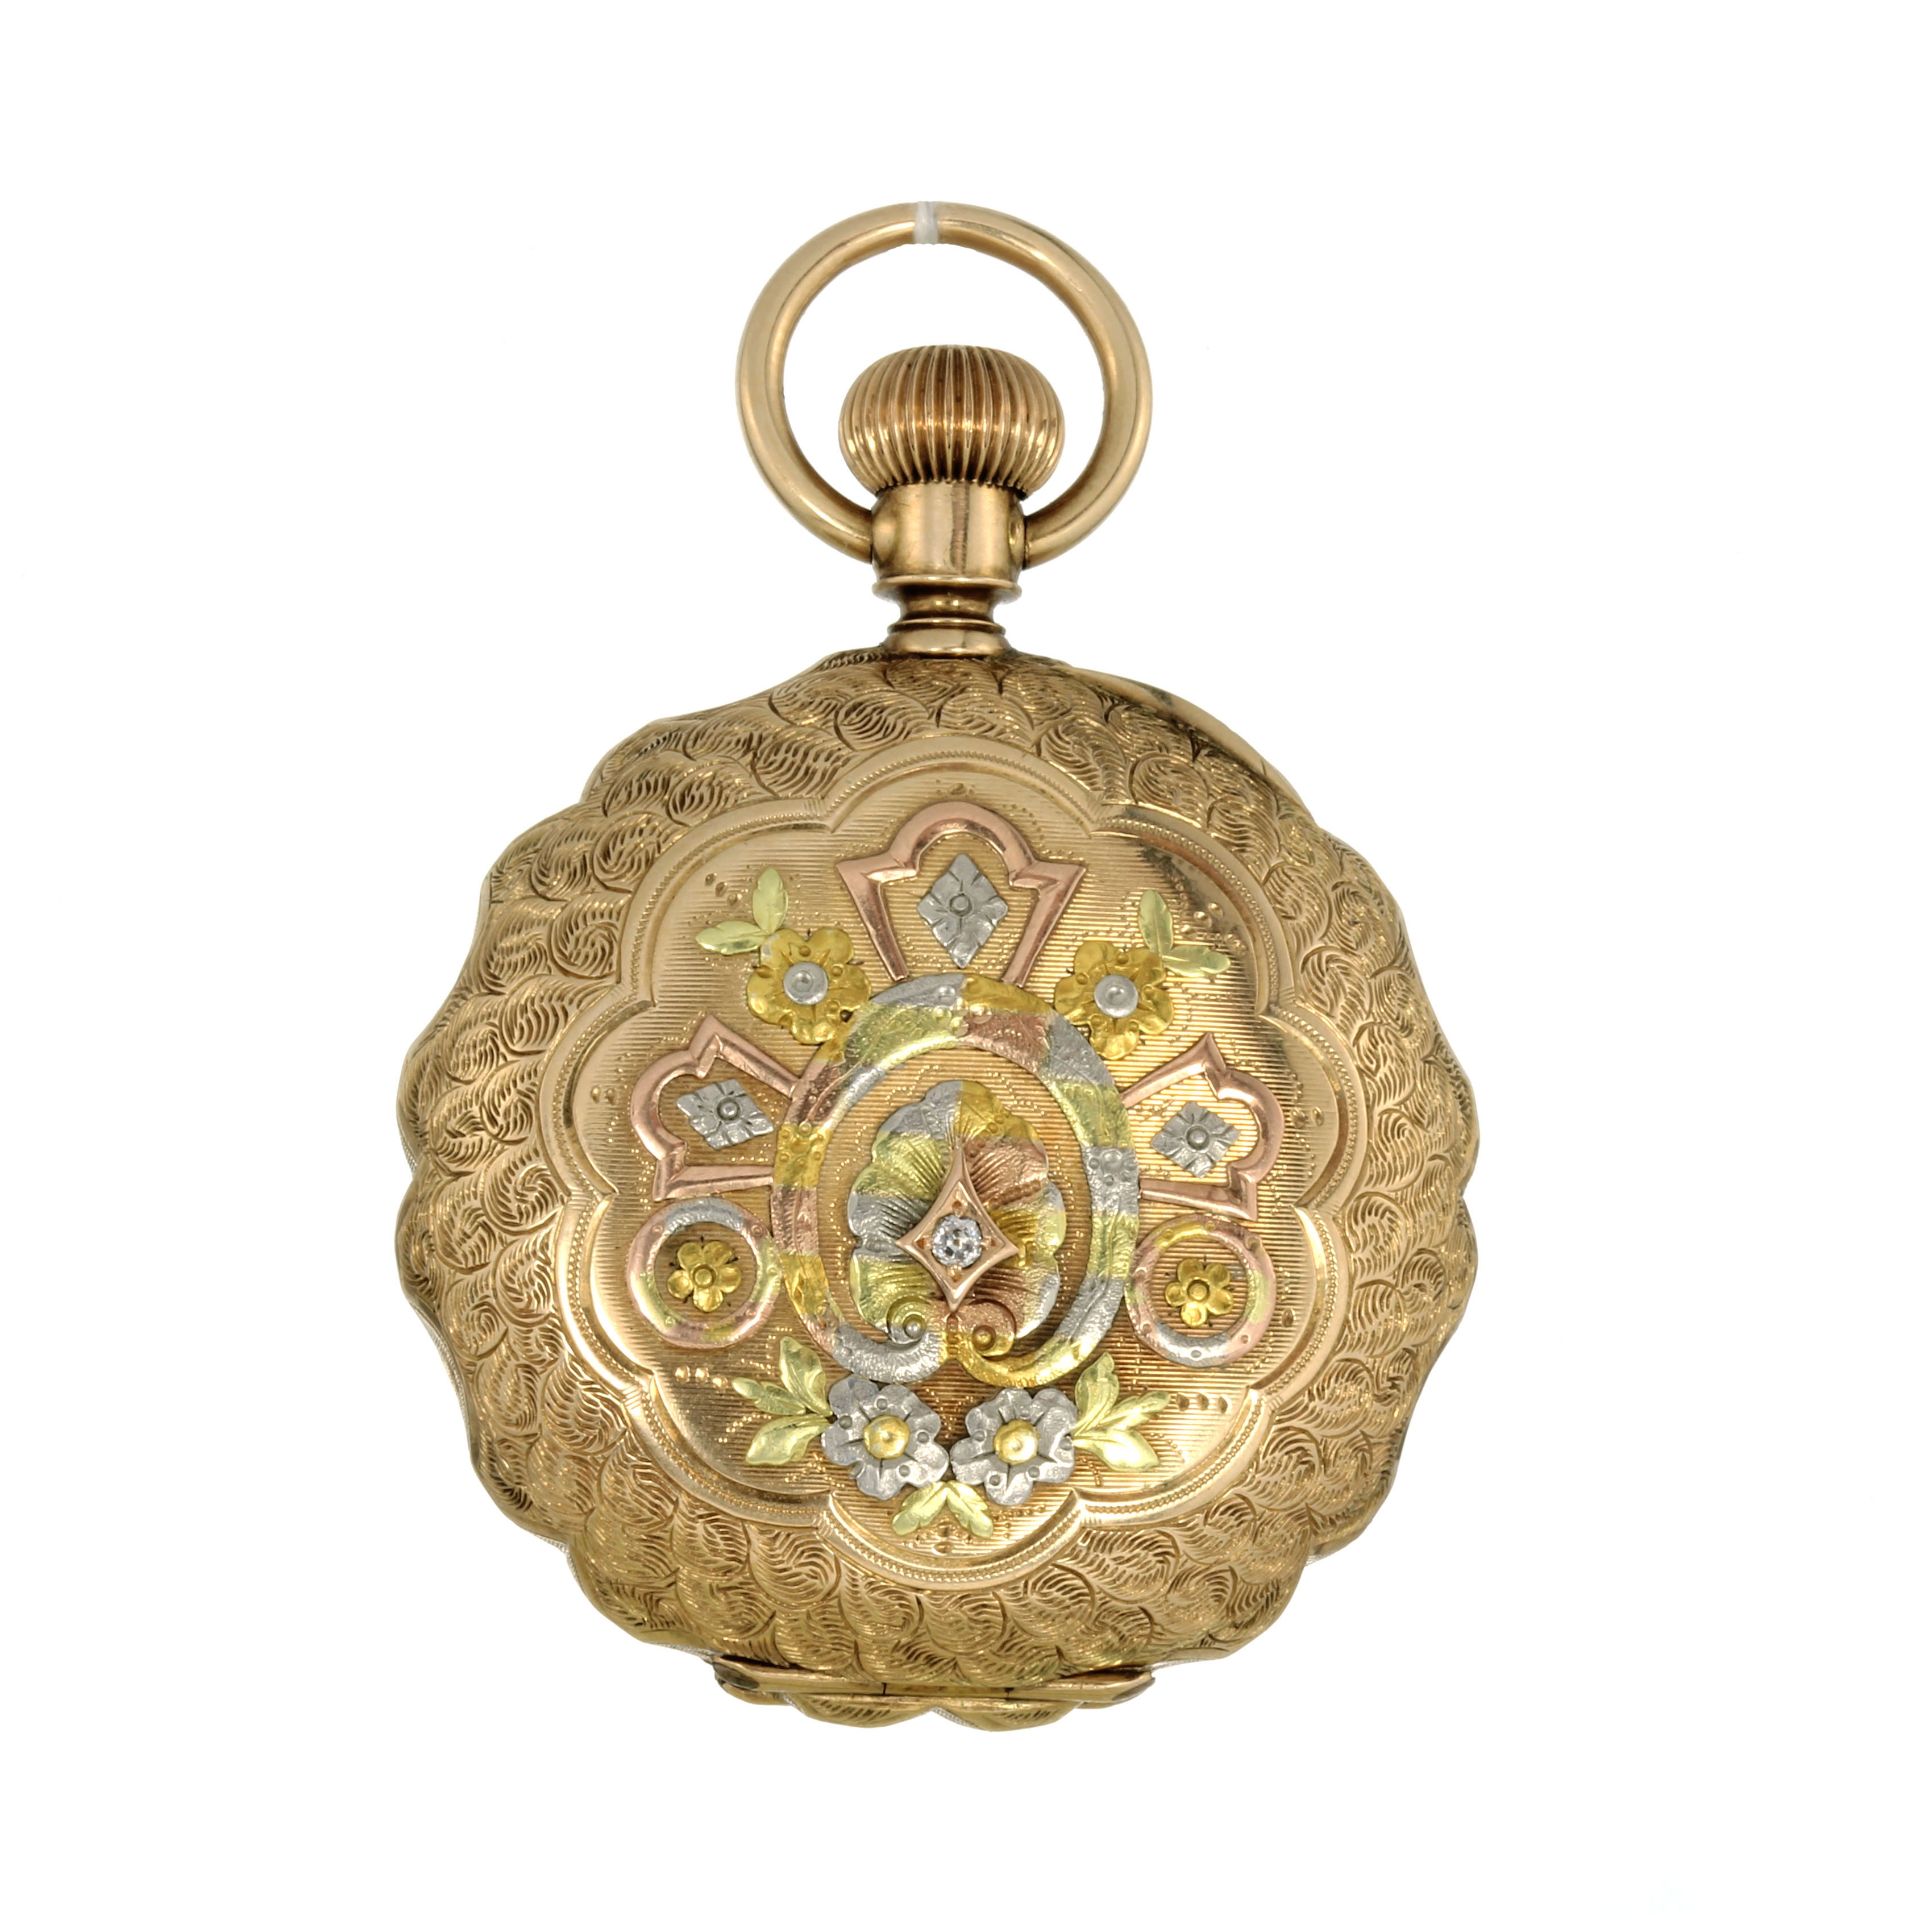 AN ANTIQUE DIAMOND POCKET WATCH BY ELGIN, CIRCA 1890 in 14ct vari-coloured gold, the circular case